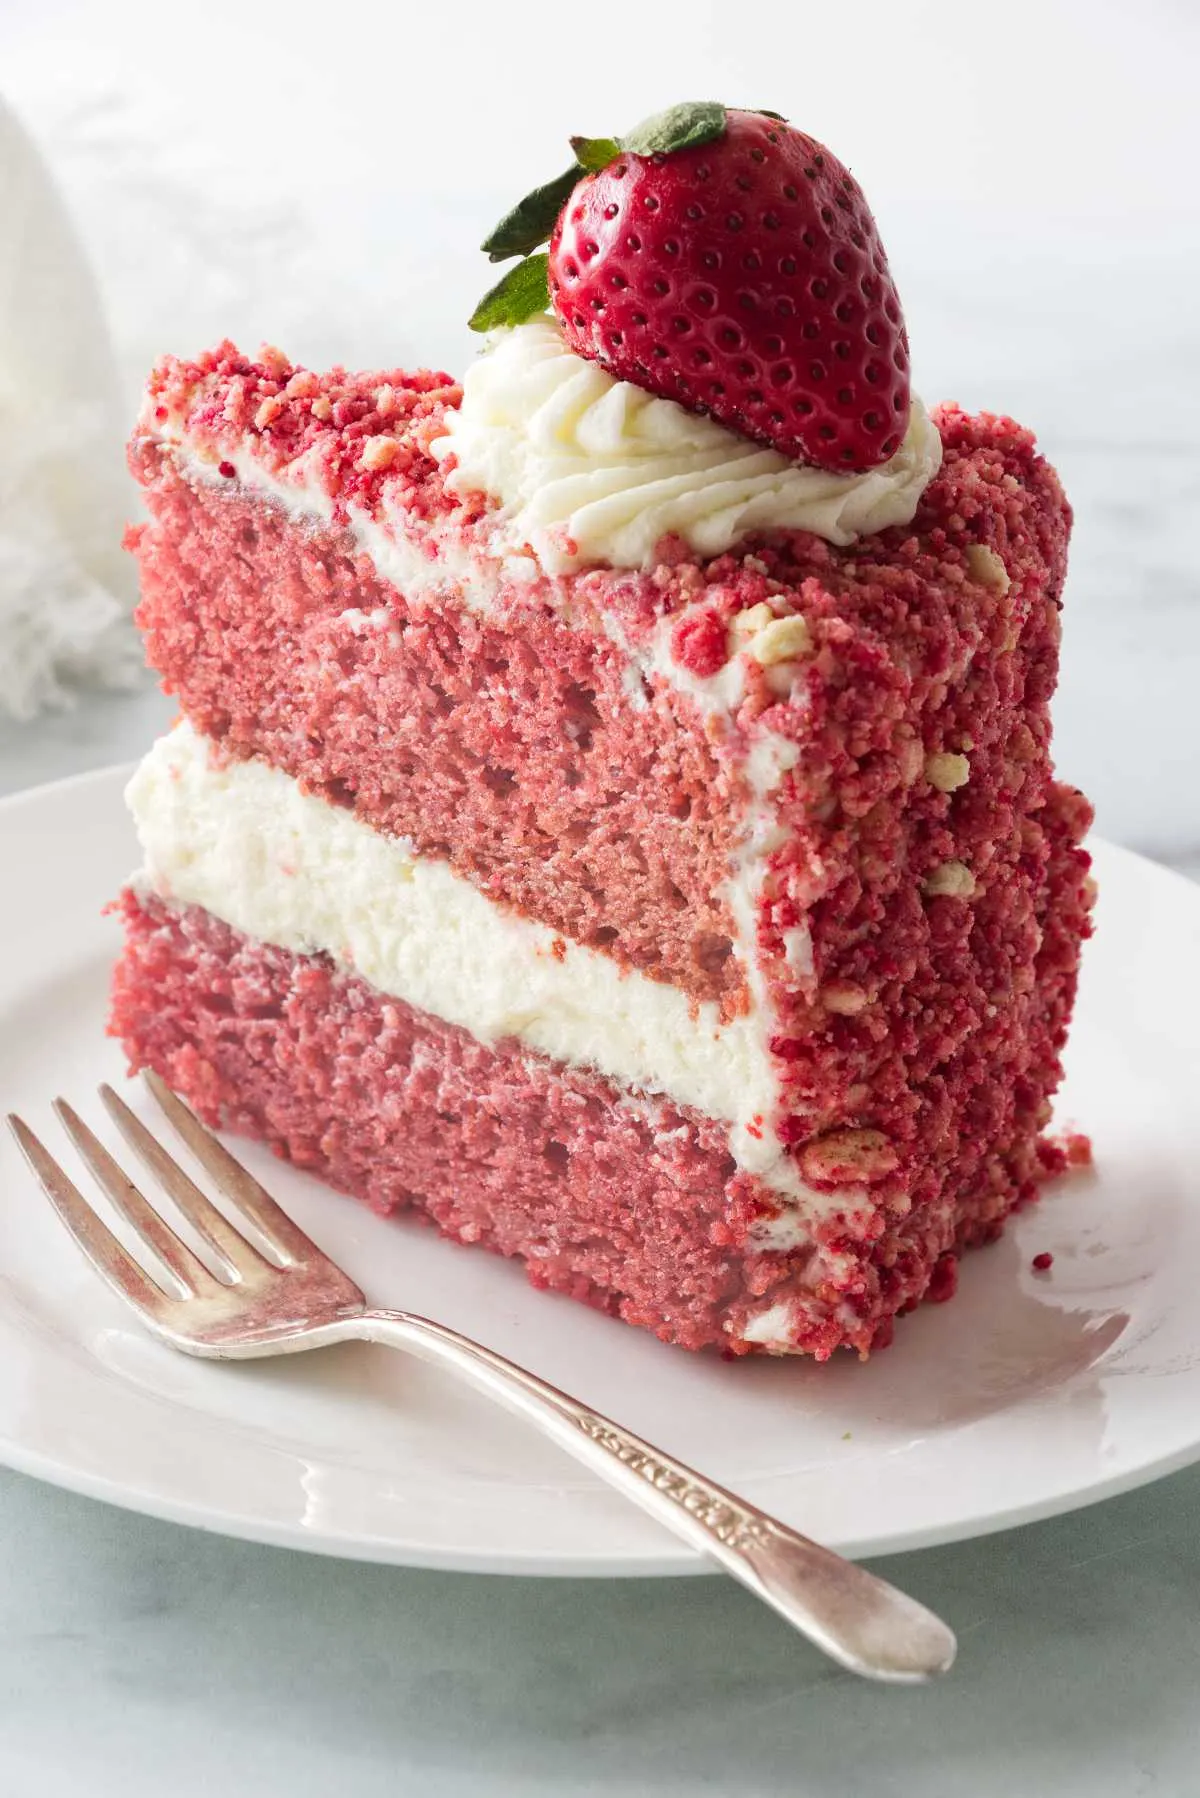 Strawberry Crunch Cake | The Recipe Critic